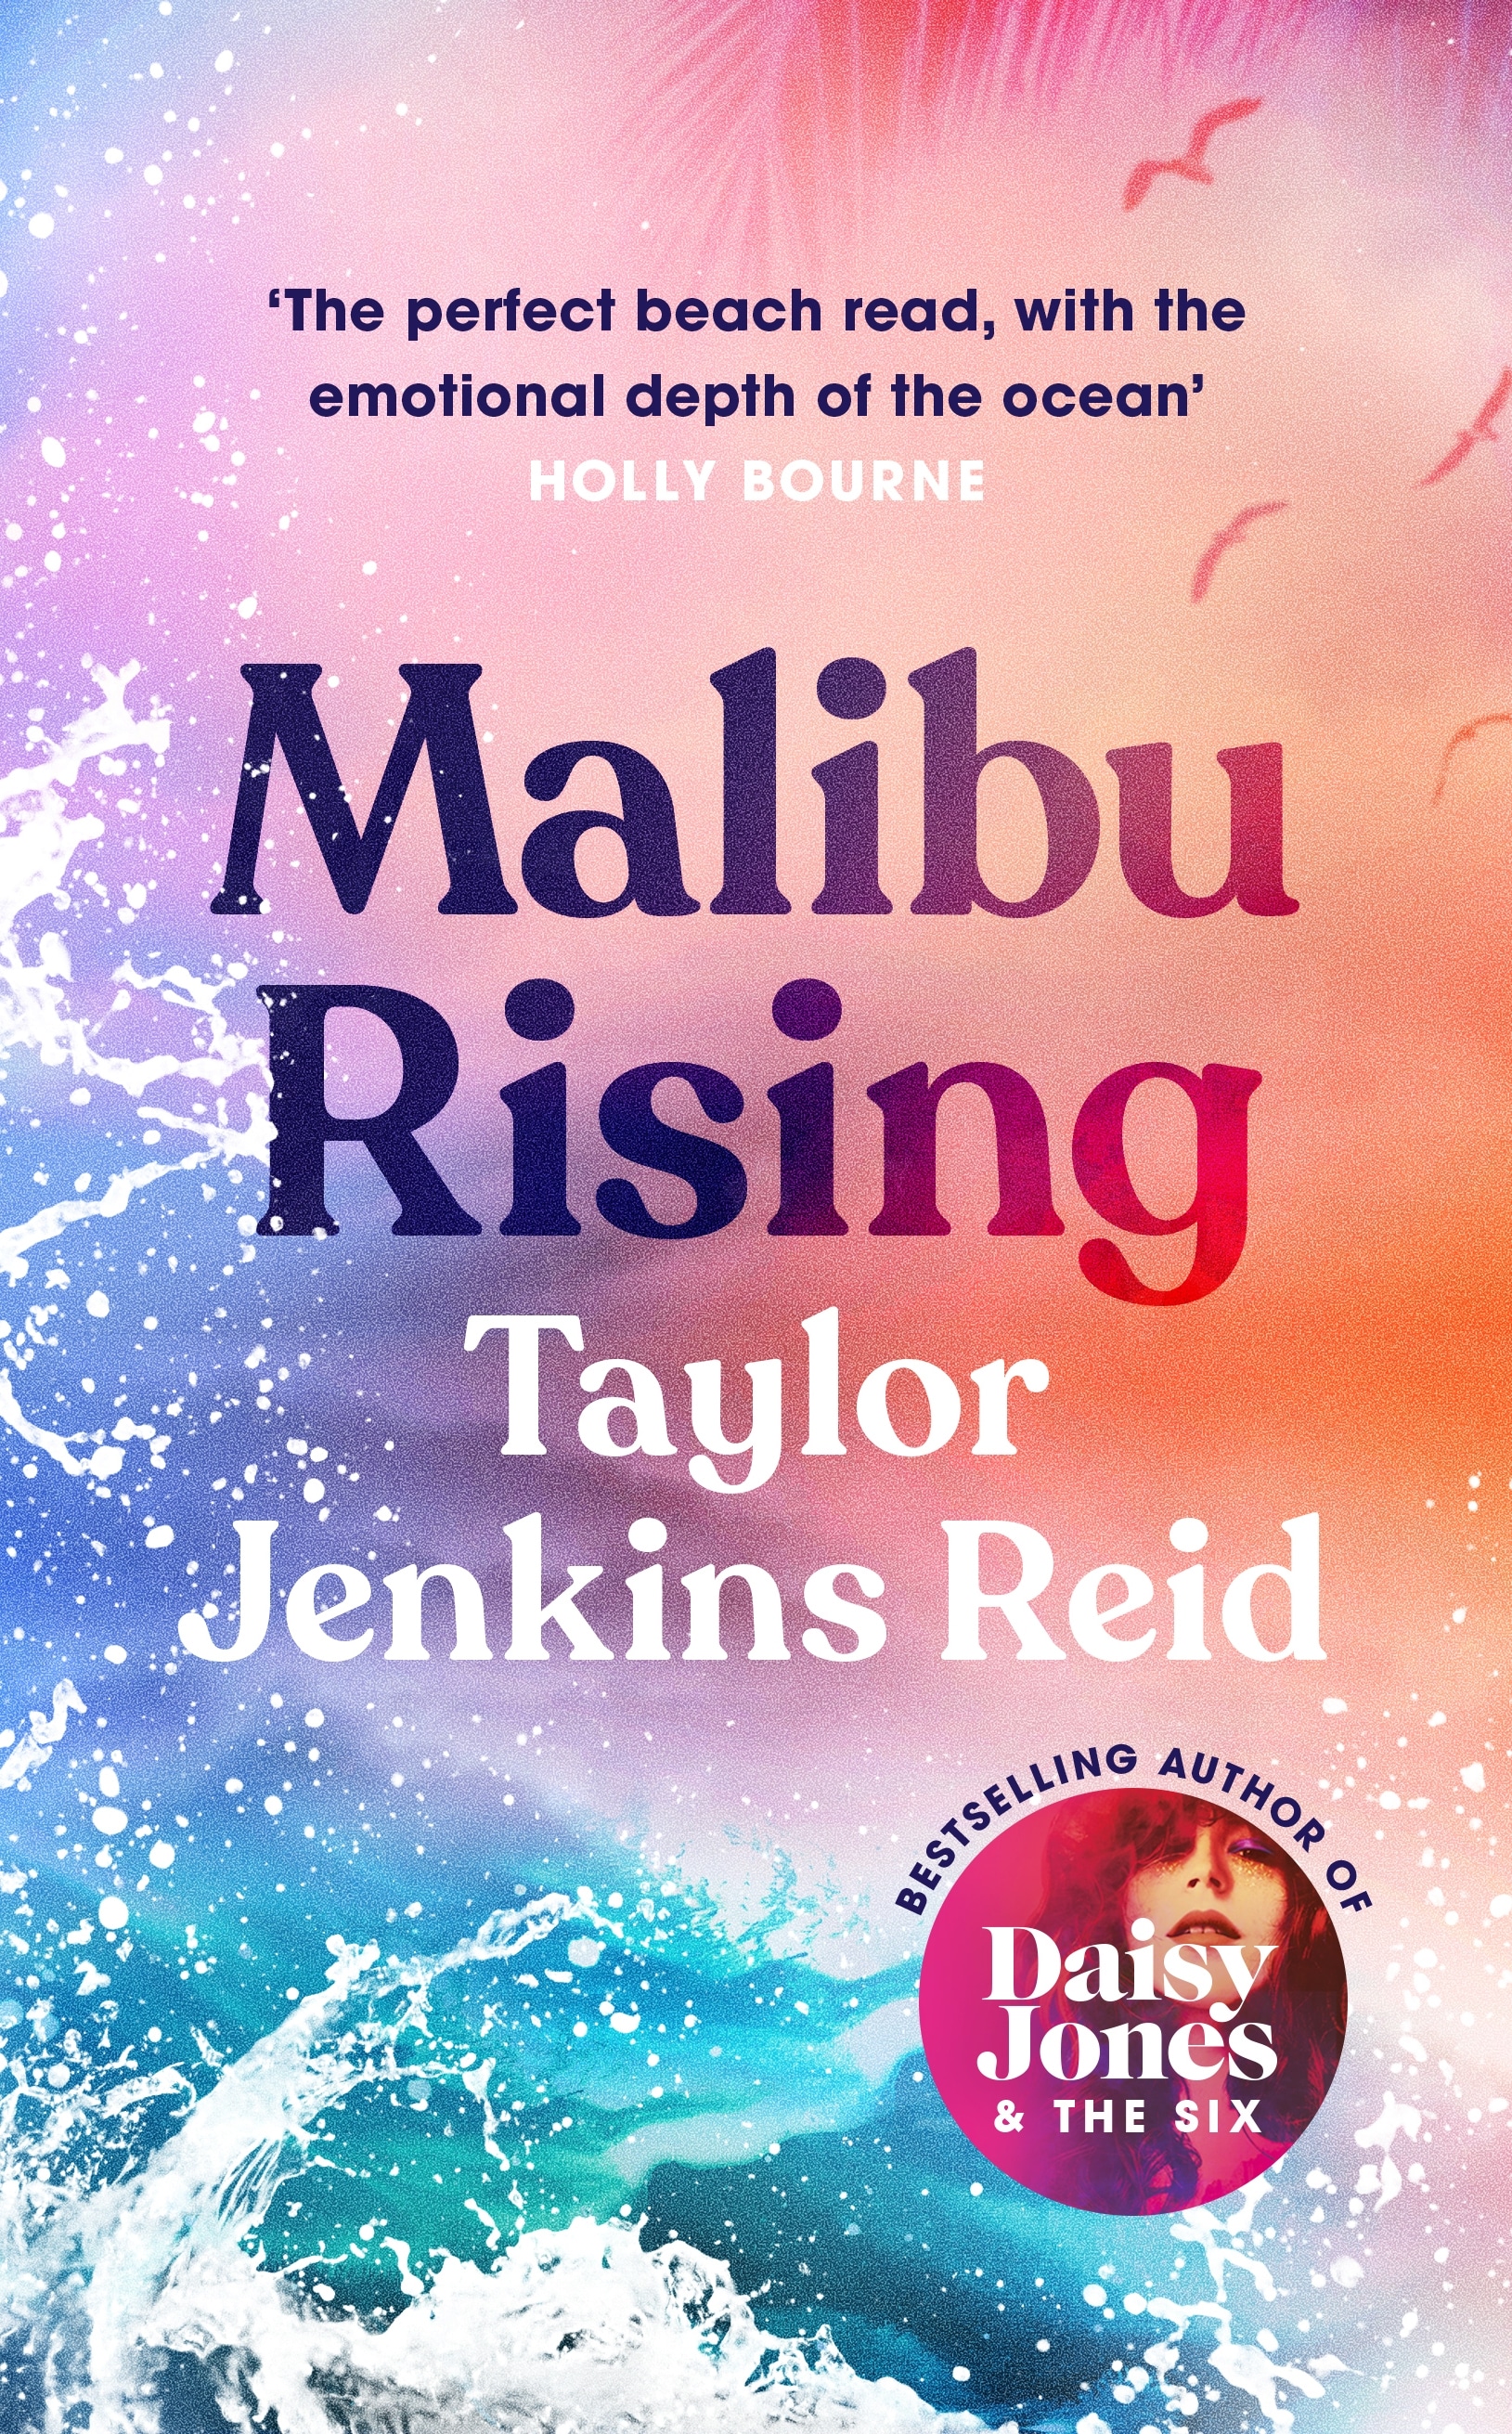 Book “Malibu Rising” by Taylor Jenkins Reid — May 27, 2021